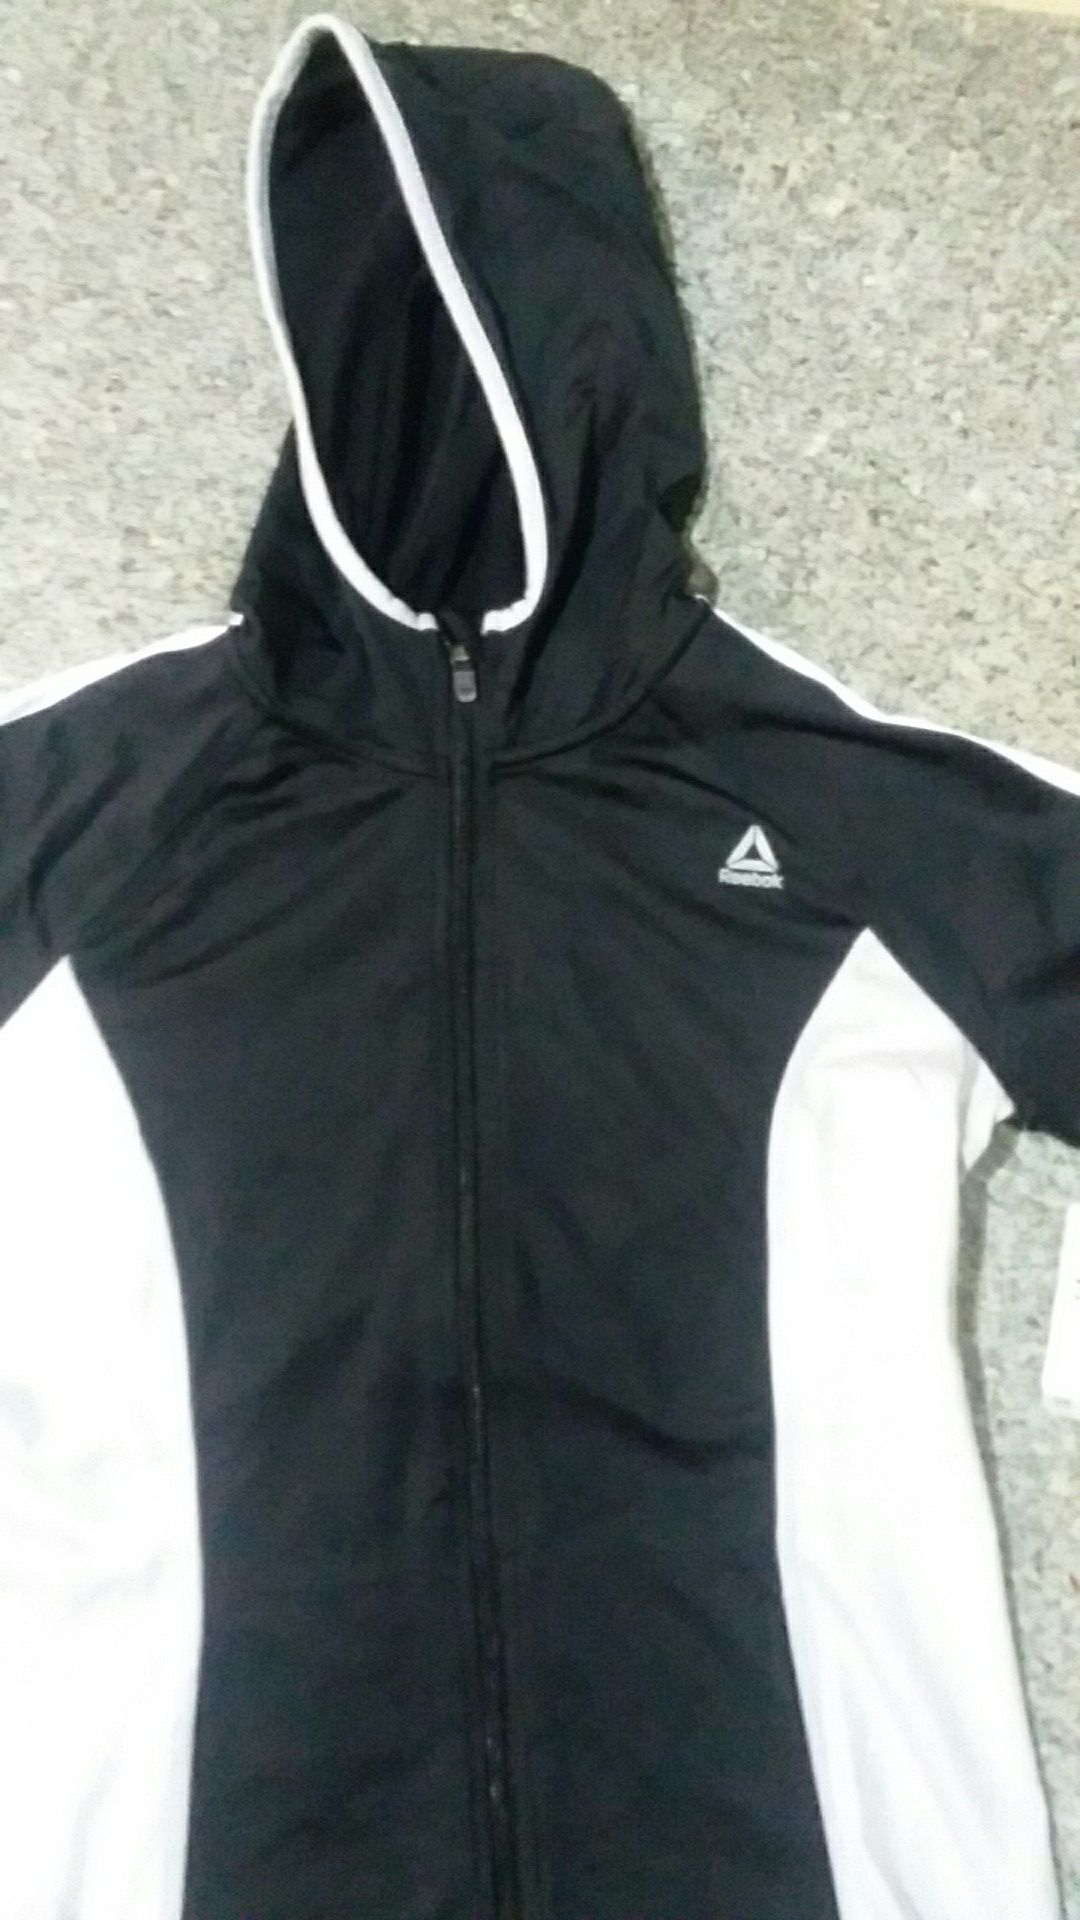 BRAND NEW Medium Reebok slim modern training jacket